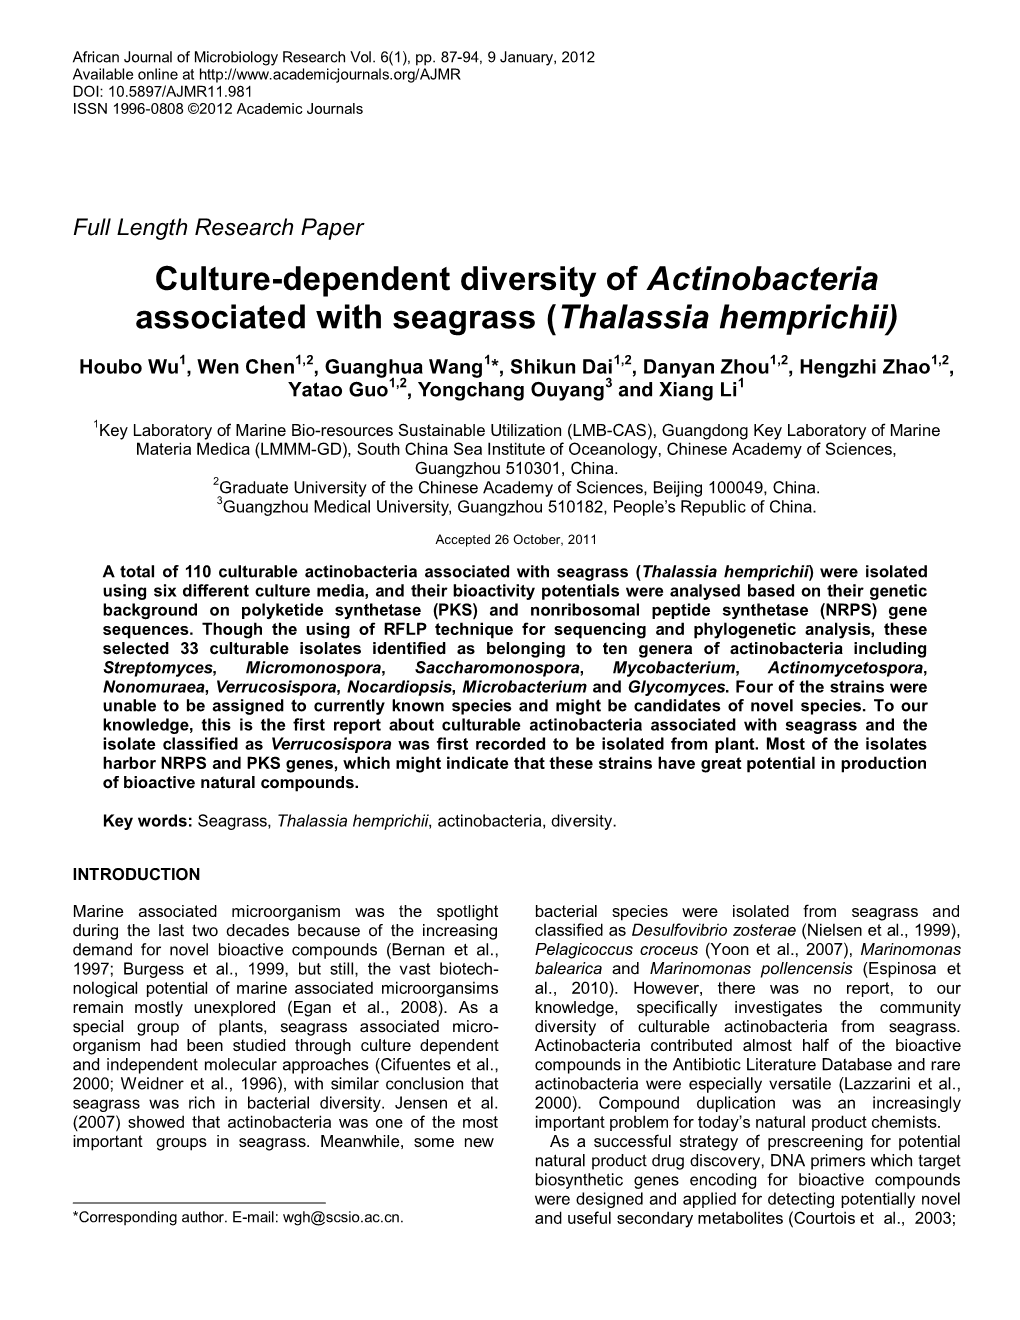 Culture-Dependent Diversity of Actinobacteria Associated with Seagrass (Thalassia Hemprichii)